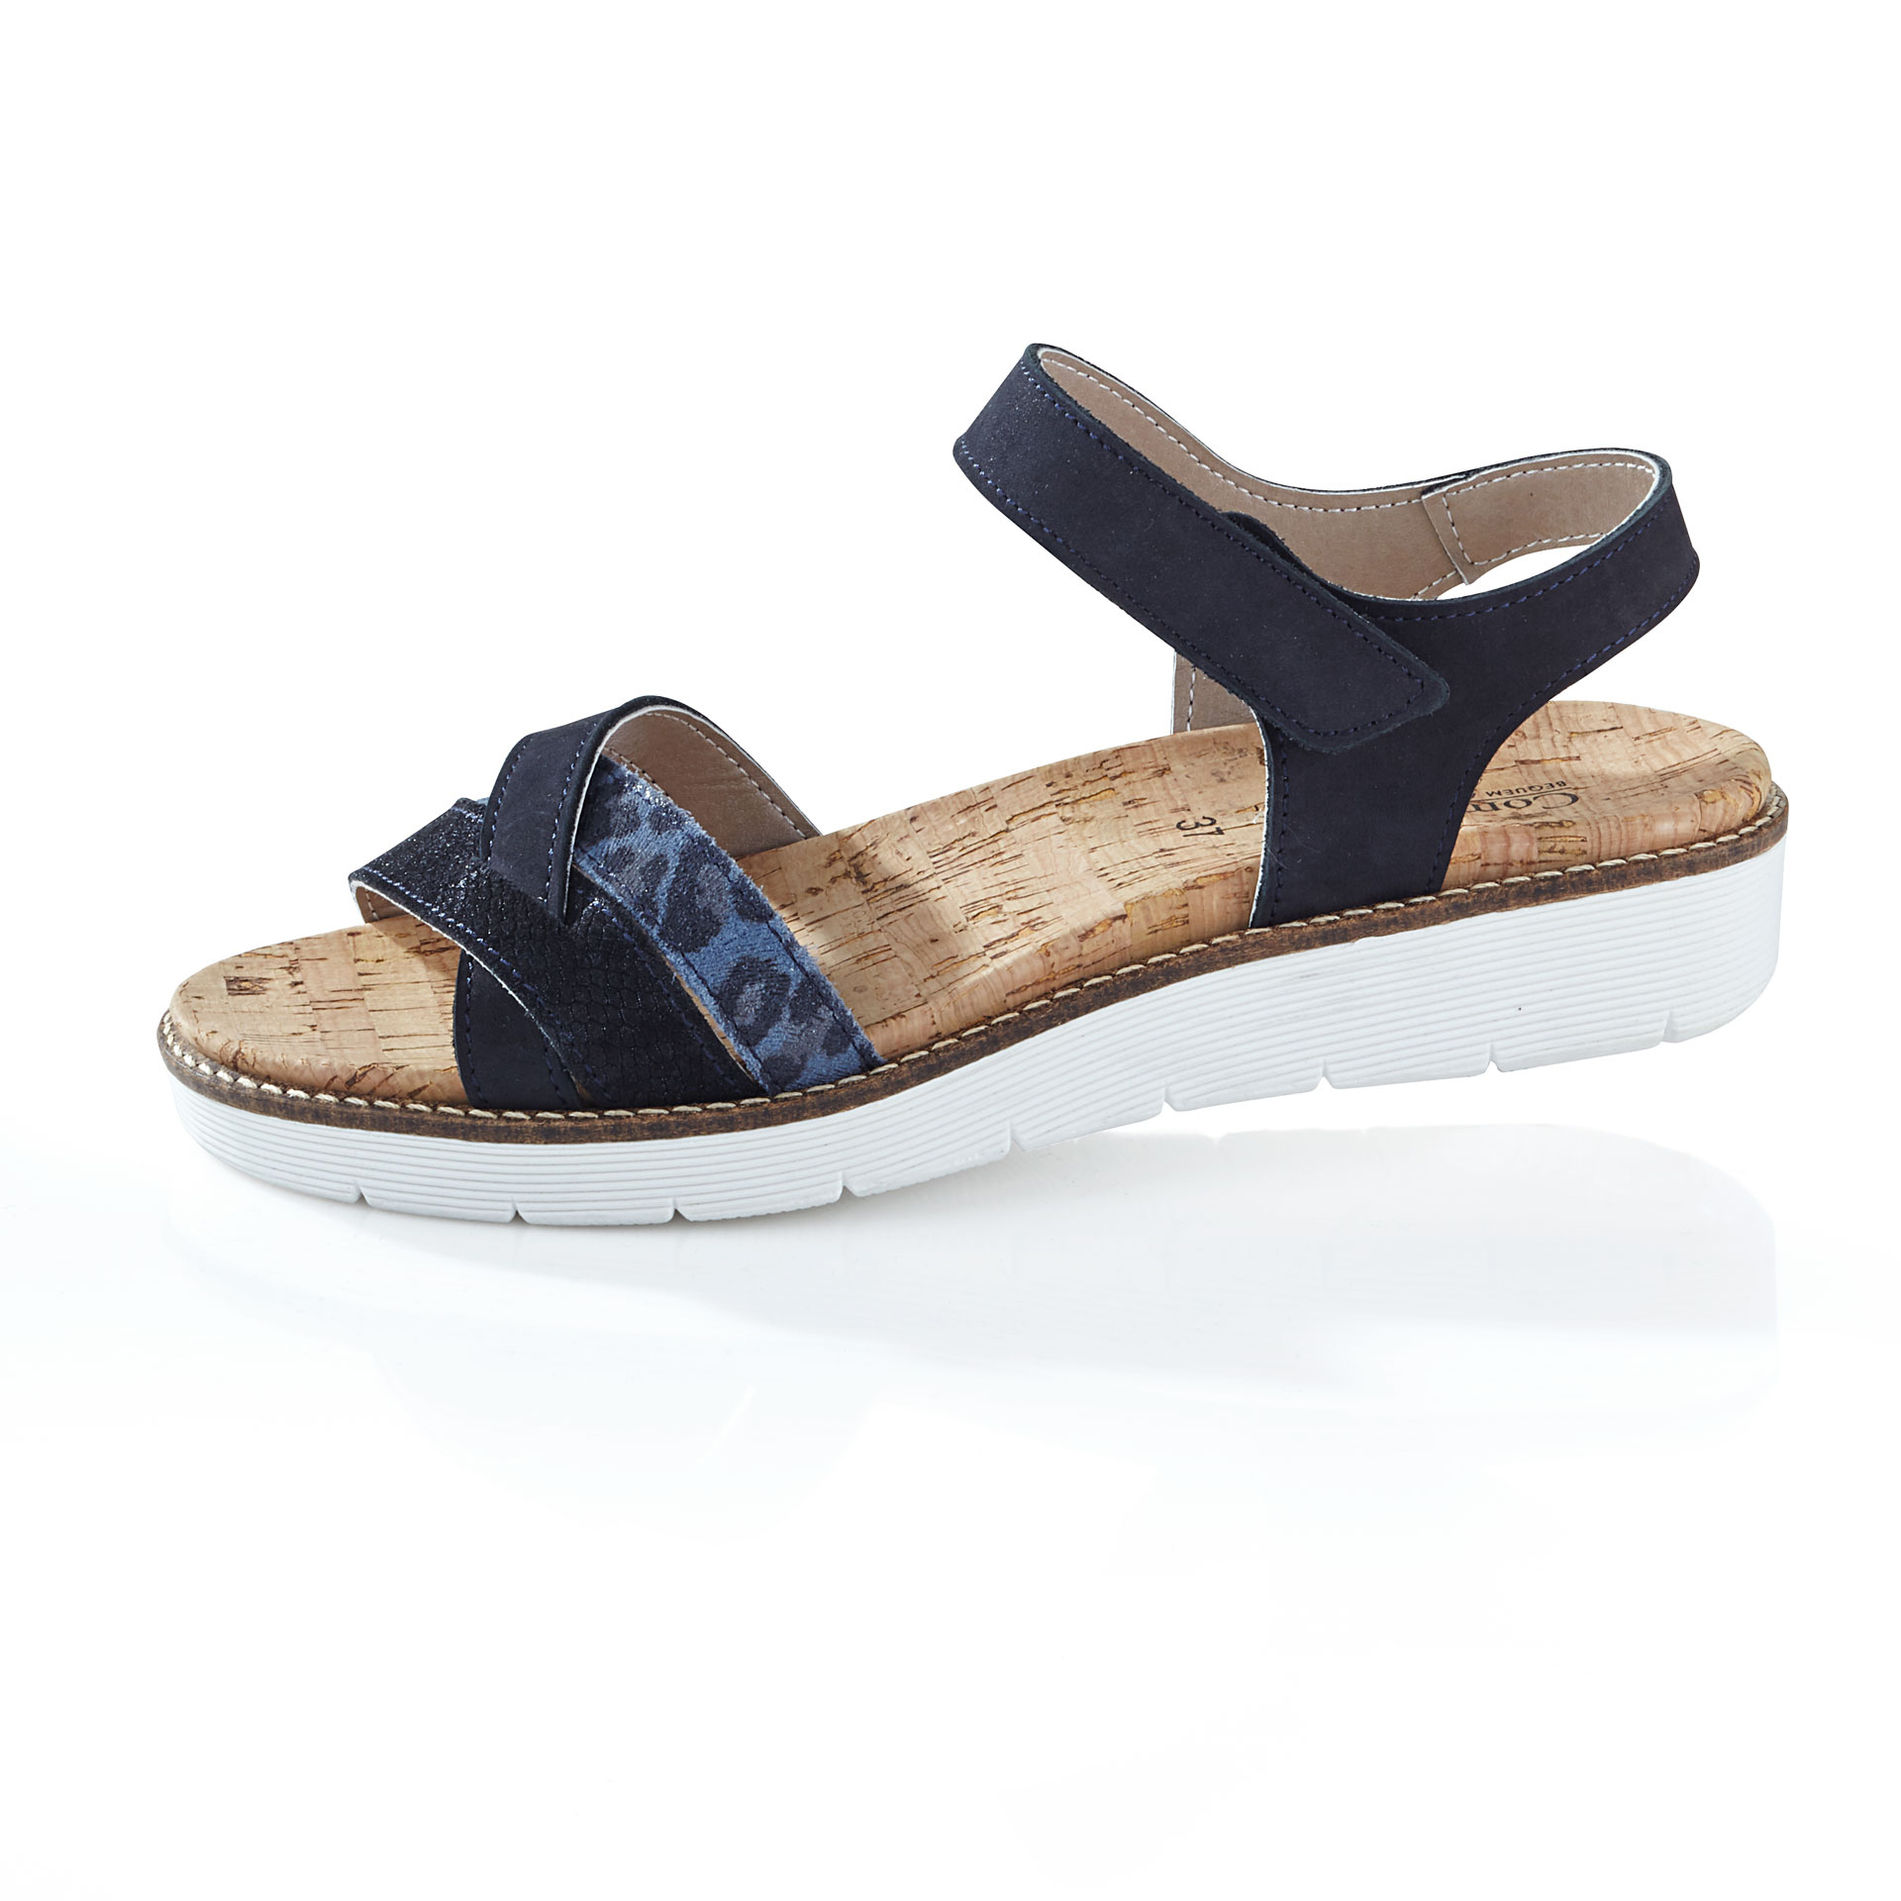 Comfortabel Damen-Sandalette Grösse: 38, dunkelblau | Weltbild.ch